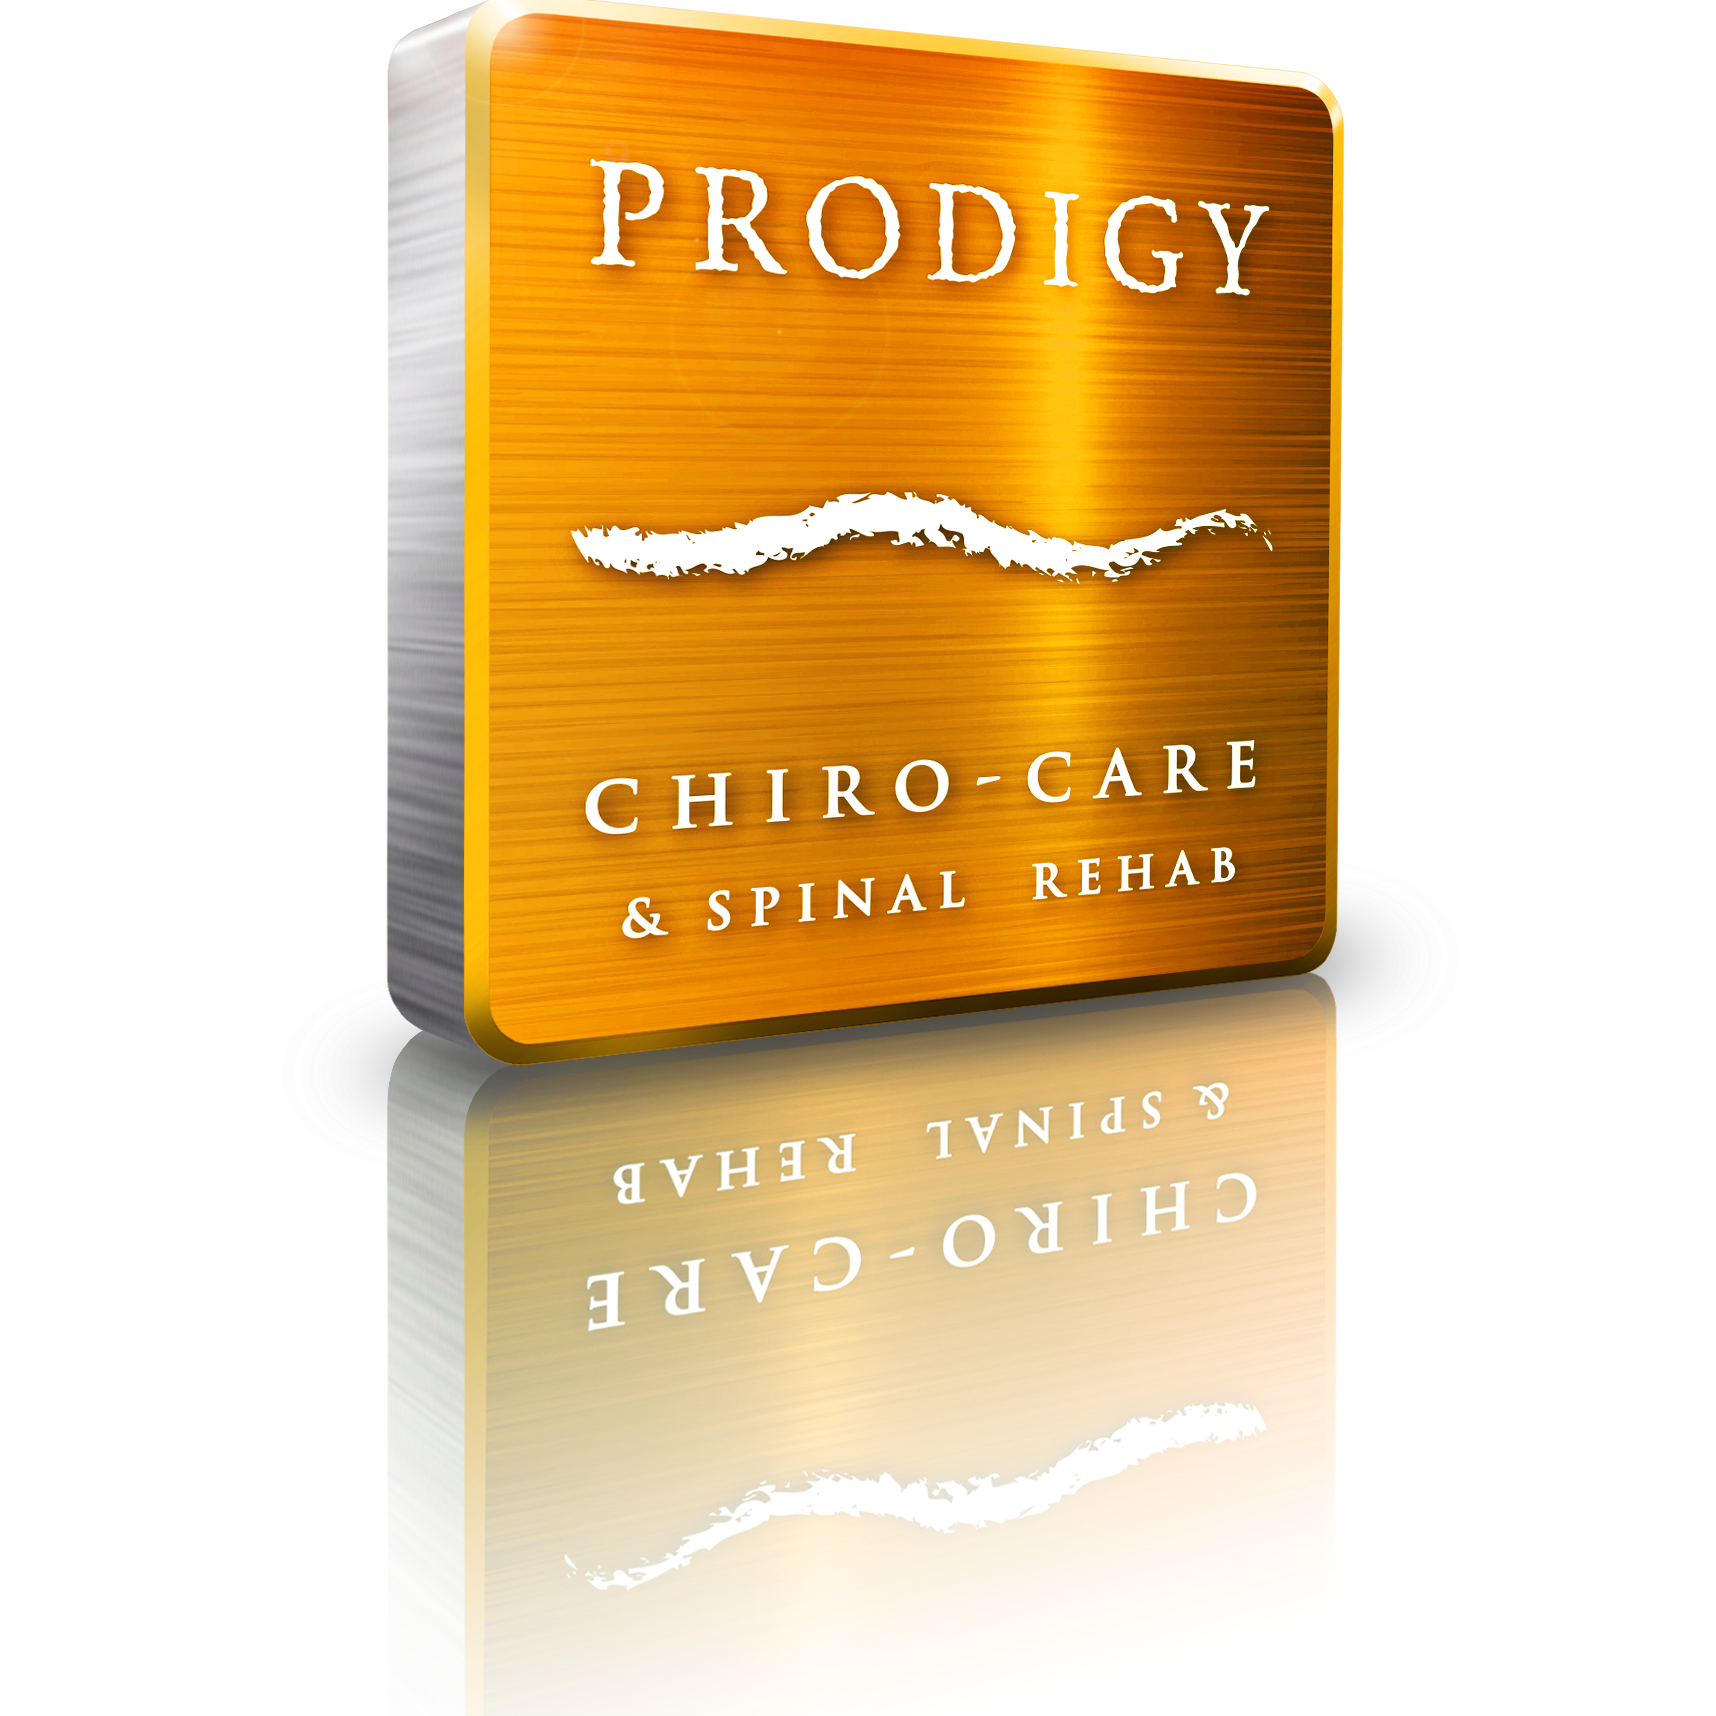 Prodigy Chiro Care & Spinal Rehab Photo